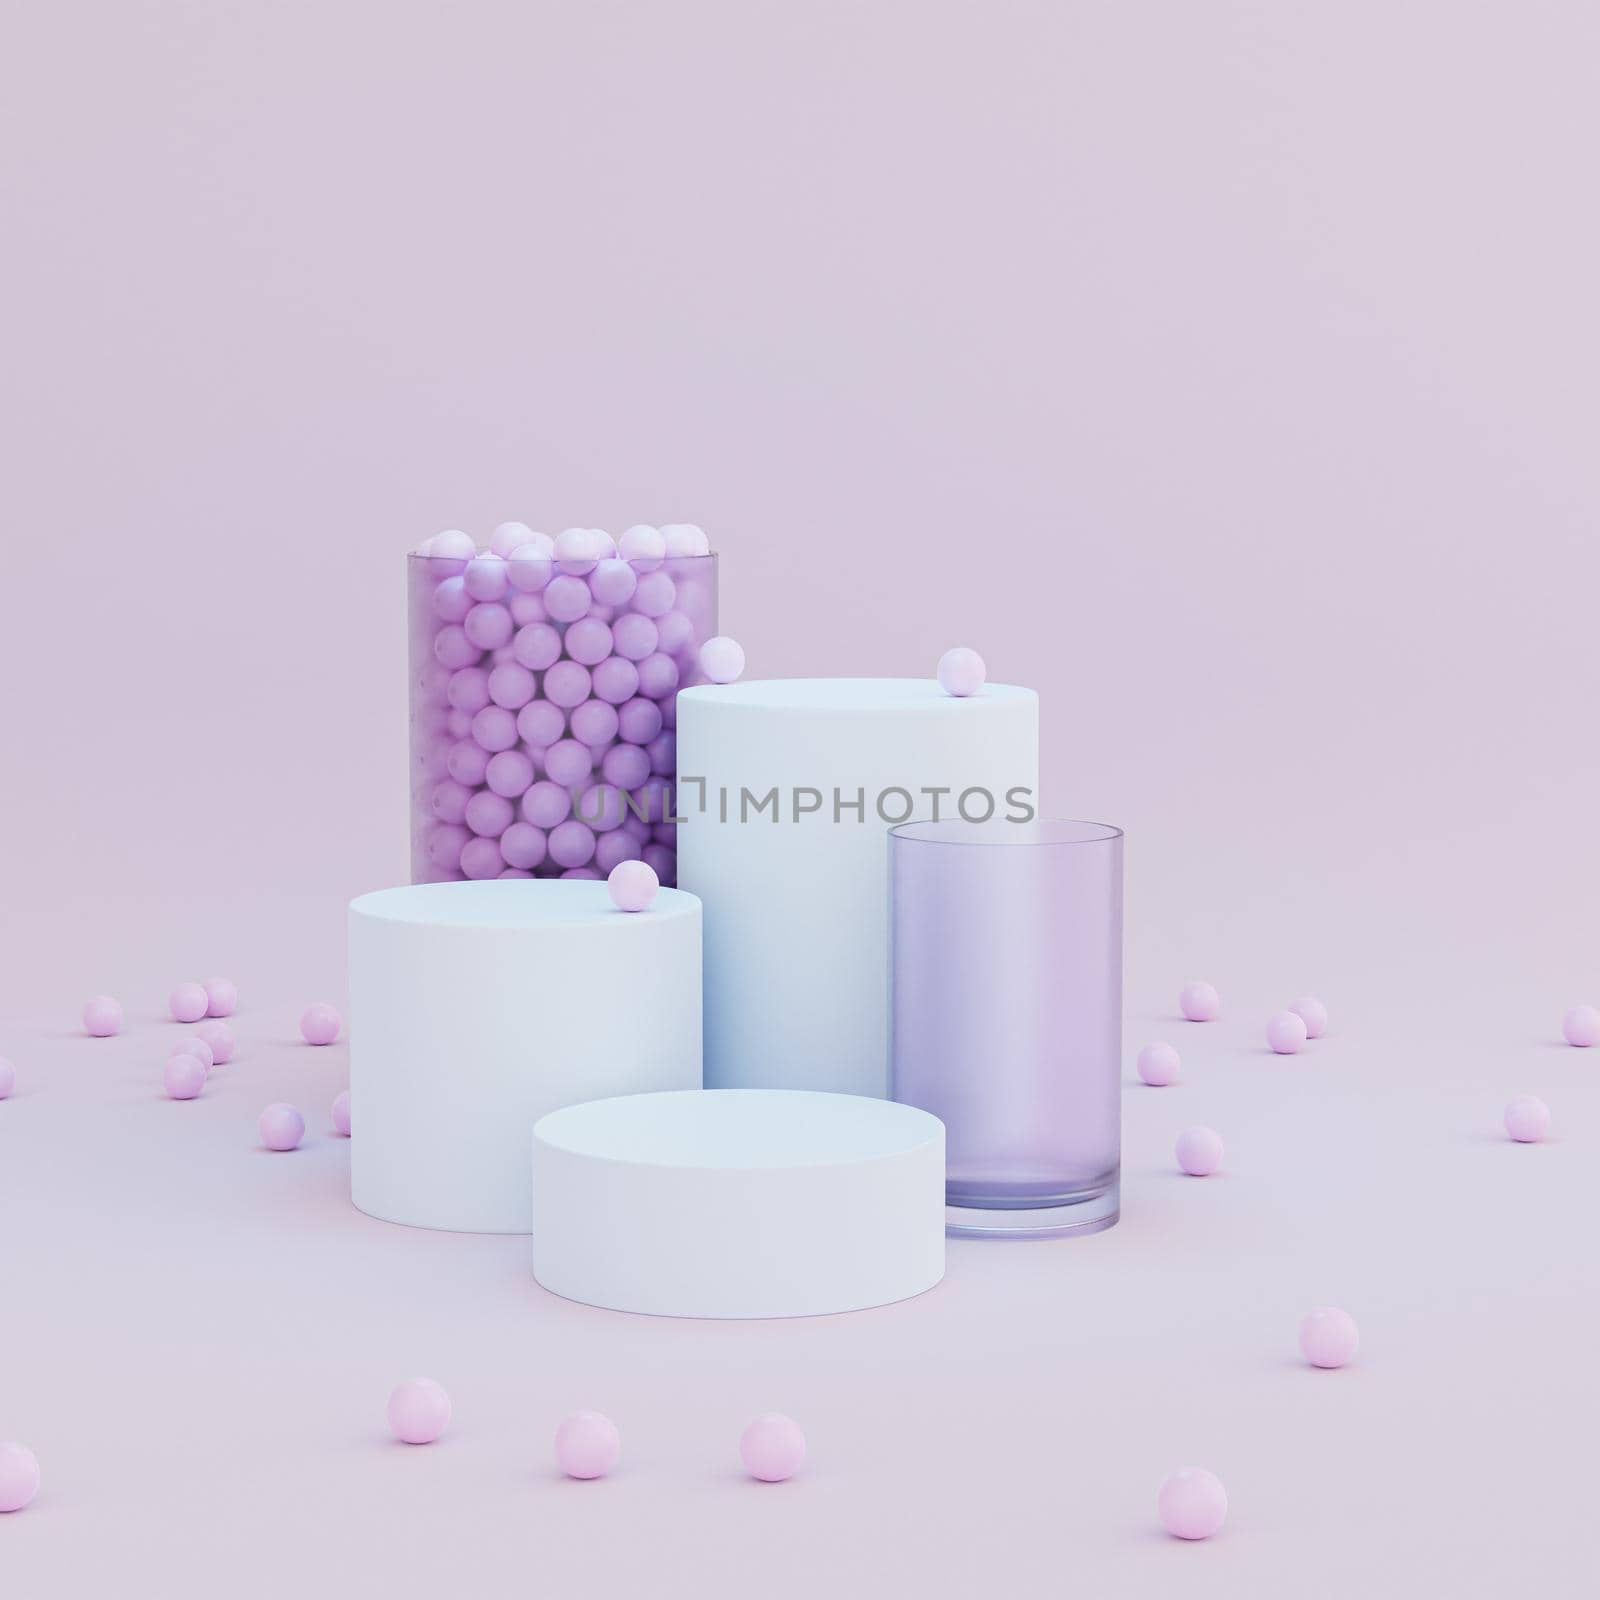 Cylinder shaped podiums or pedestals for products or advertising on pastel pink background, minimal 3d illustration render